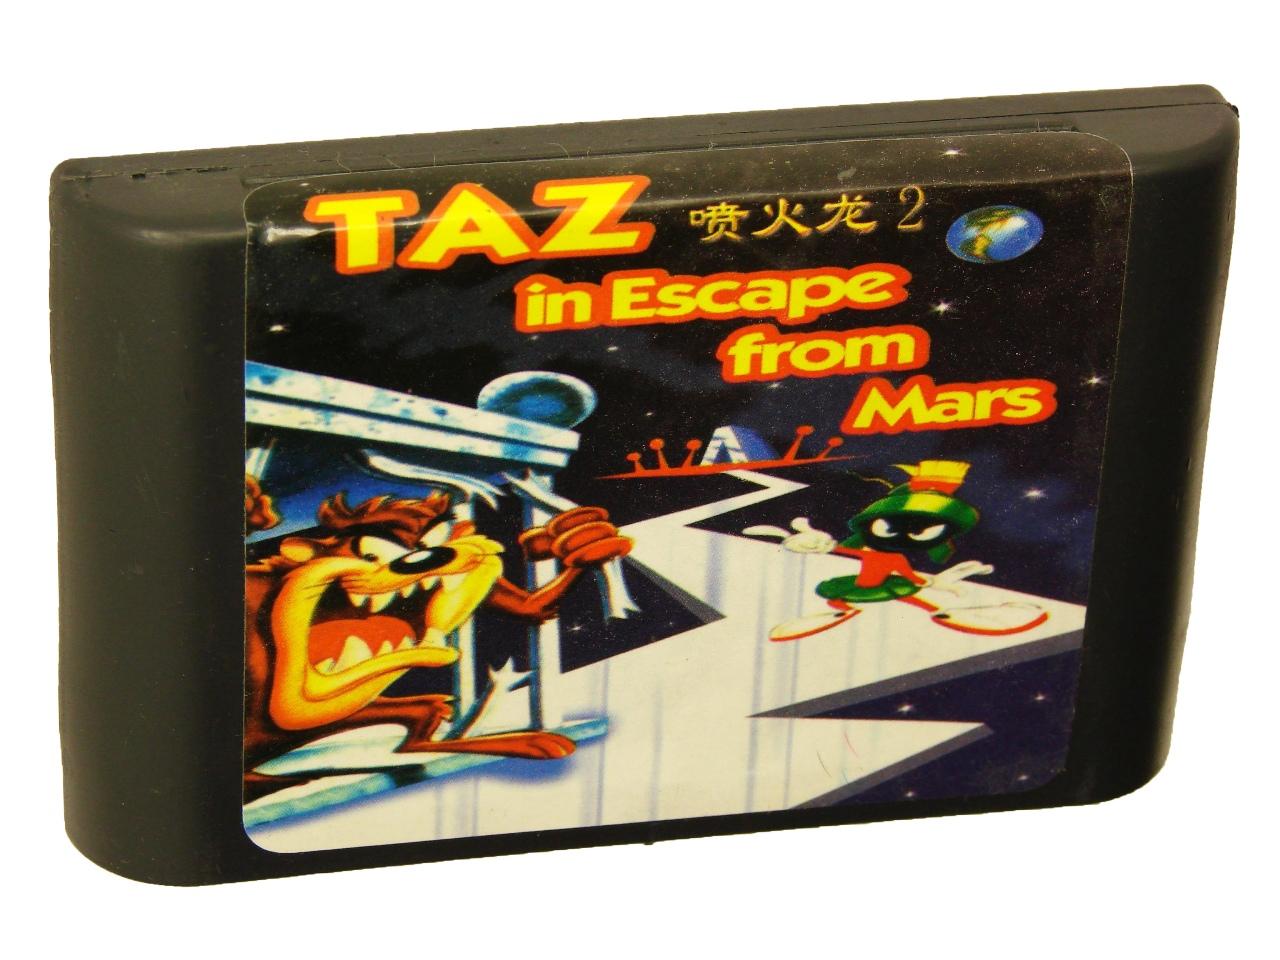 Картридж для Sega Taz in escape from Mars (Sega)